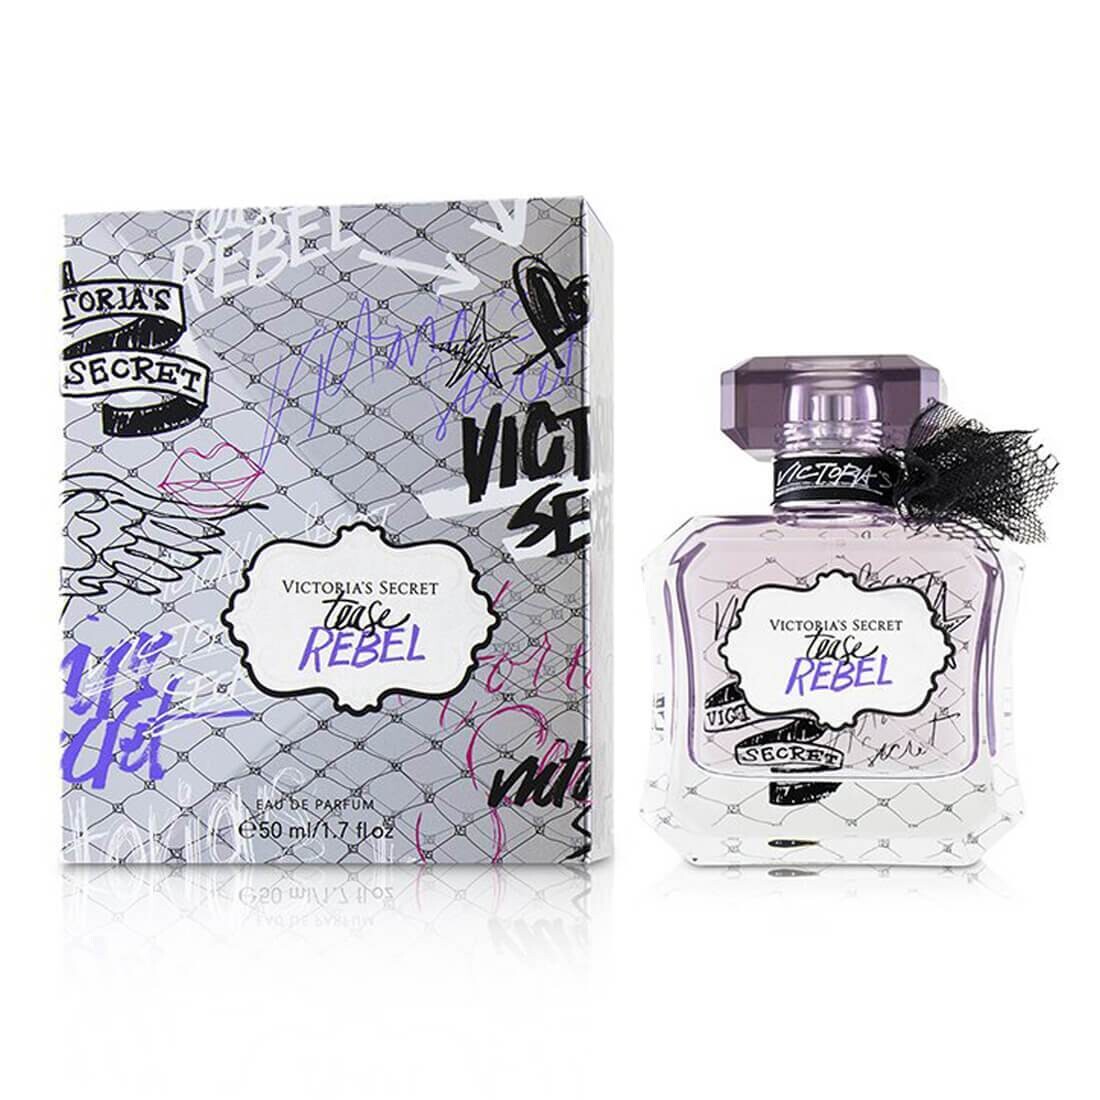 Victoria’s Secret Tease Rebel Eau De Perfume – 50ml